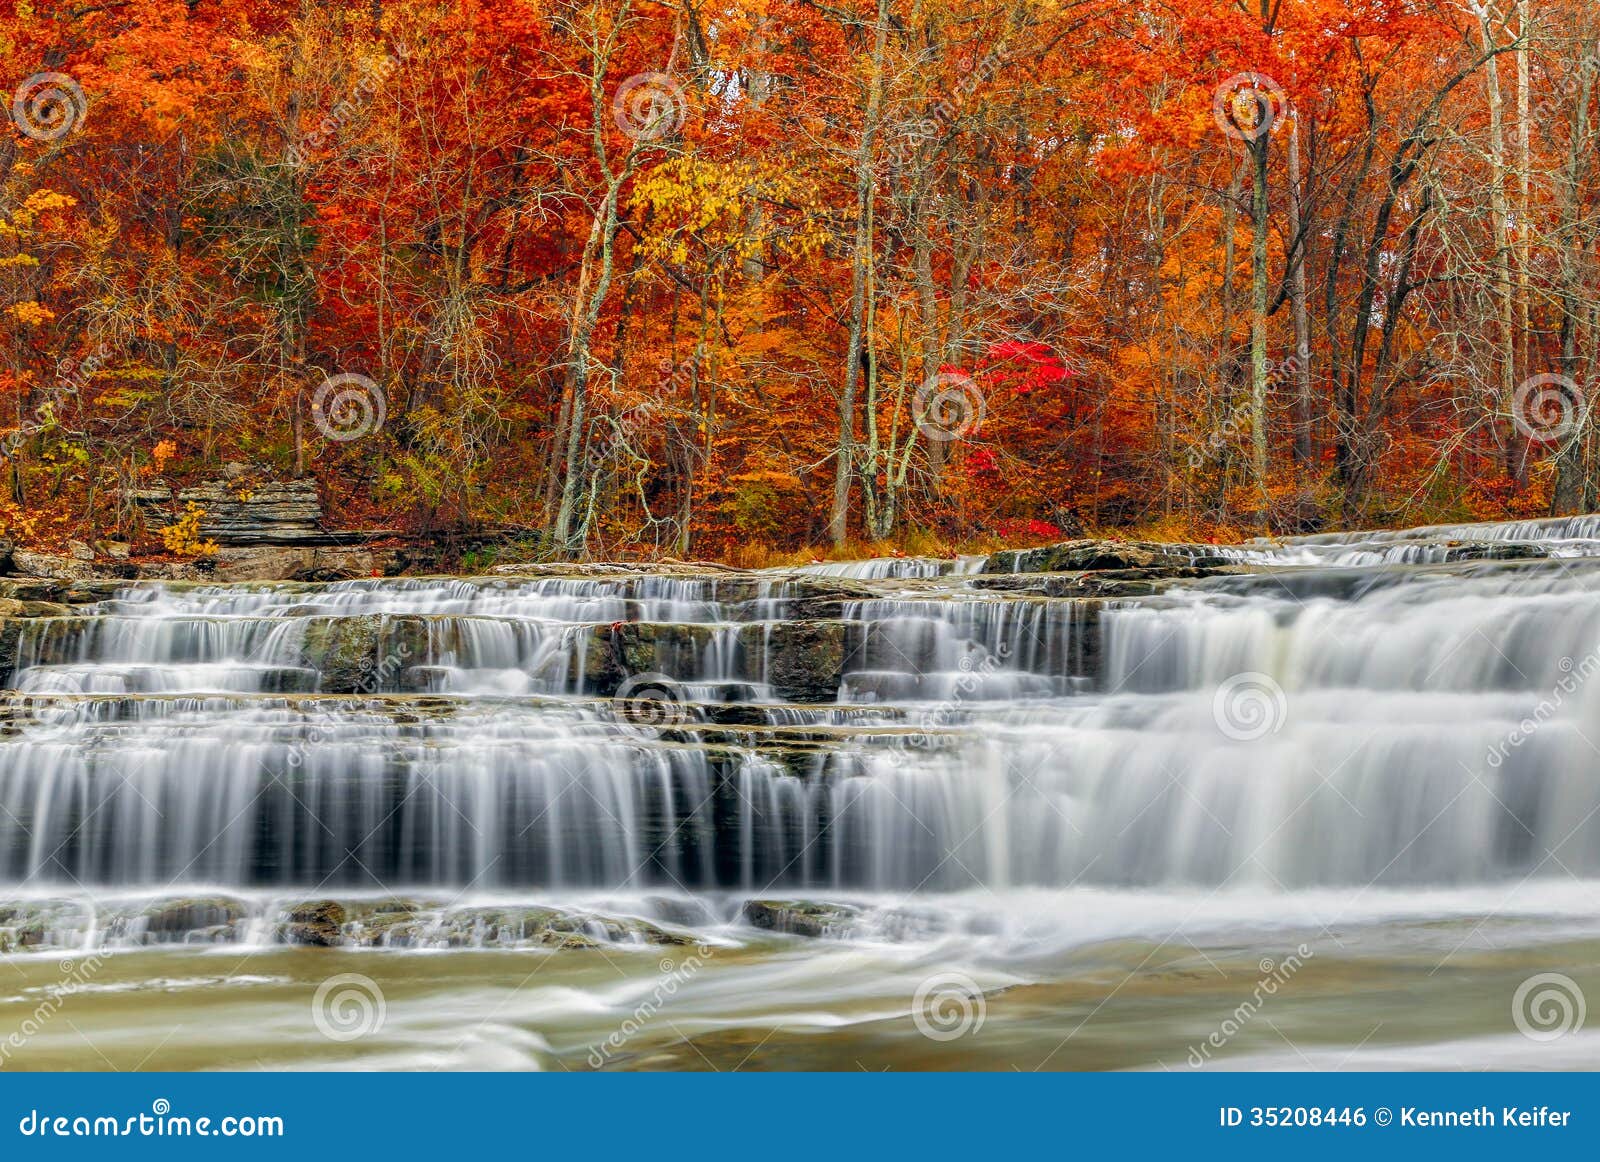 autumn at upper cataract falls